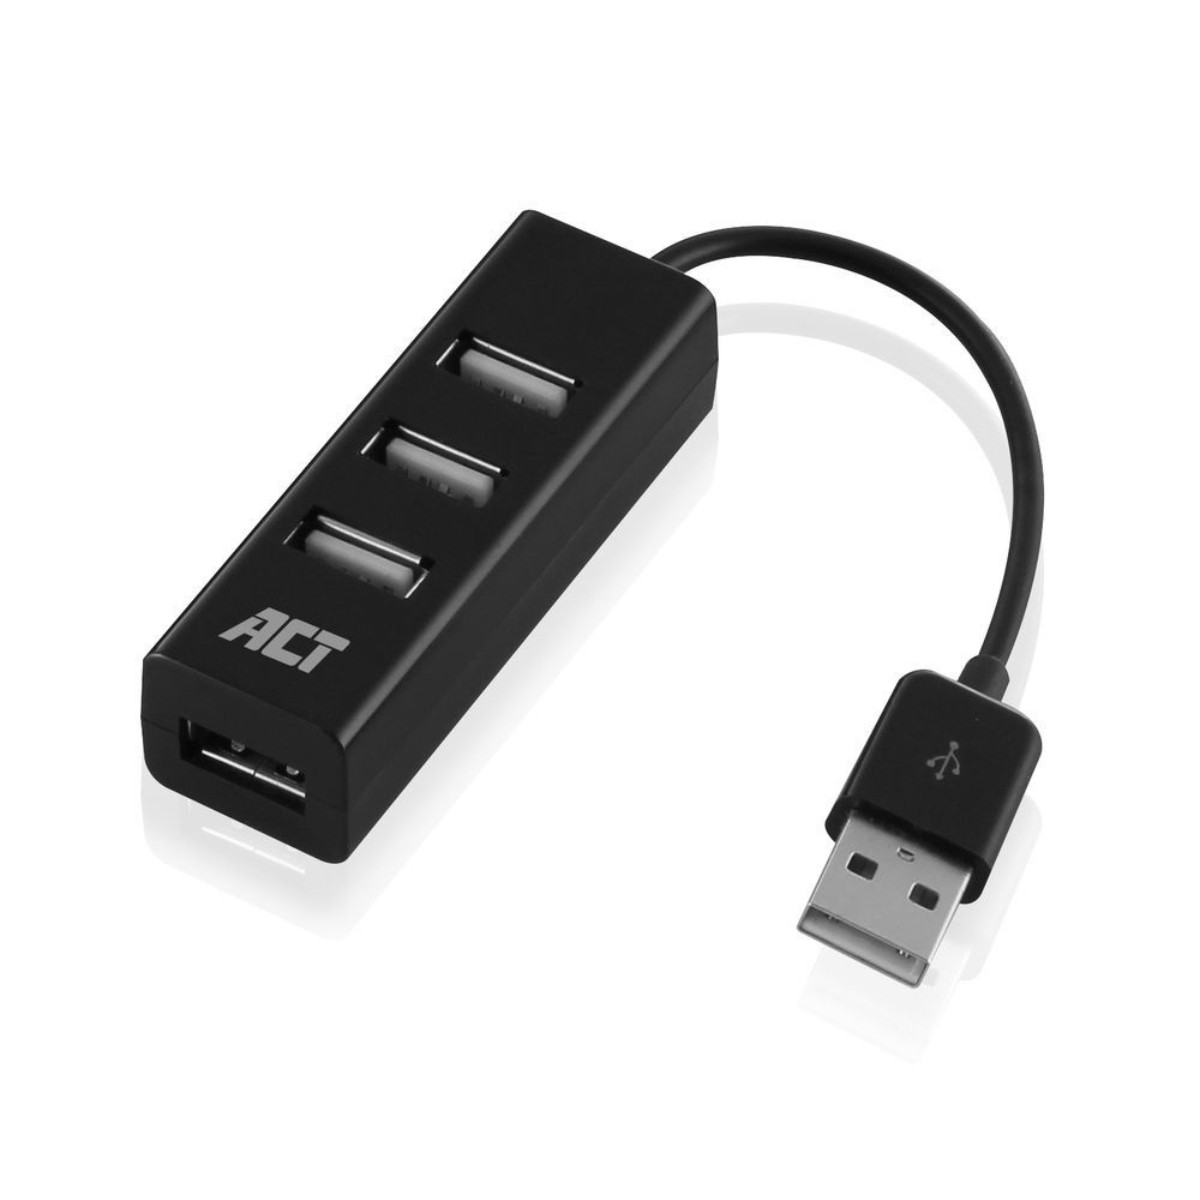 Schwarz AC6205, ACT USB Hub,